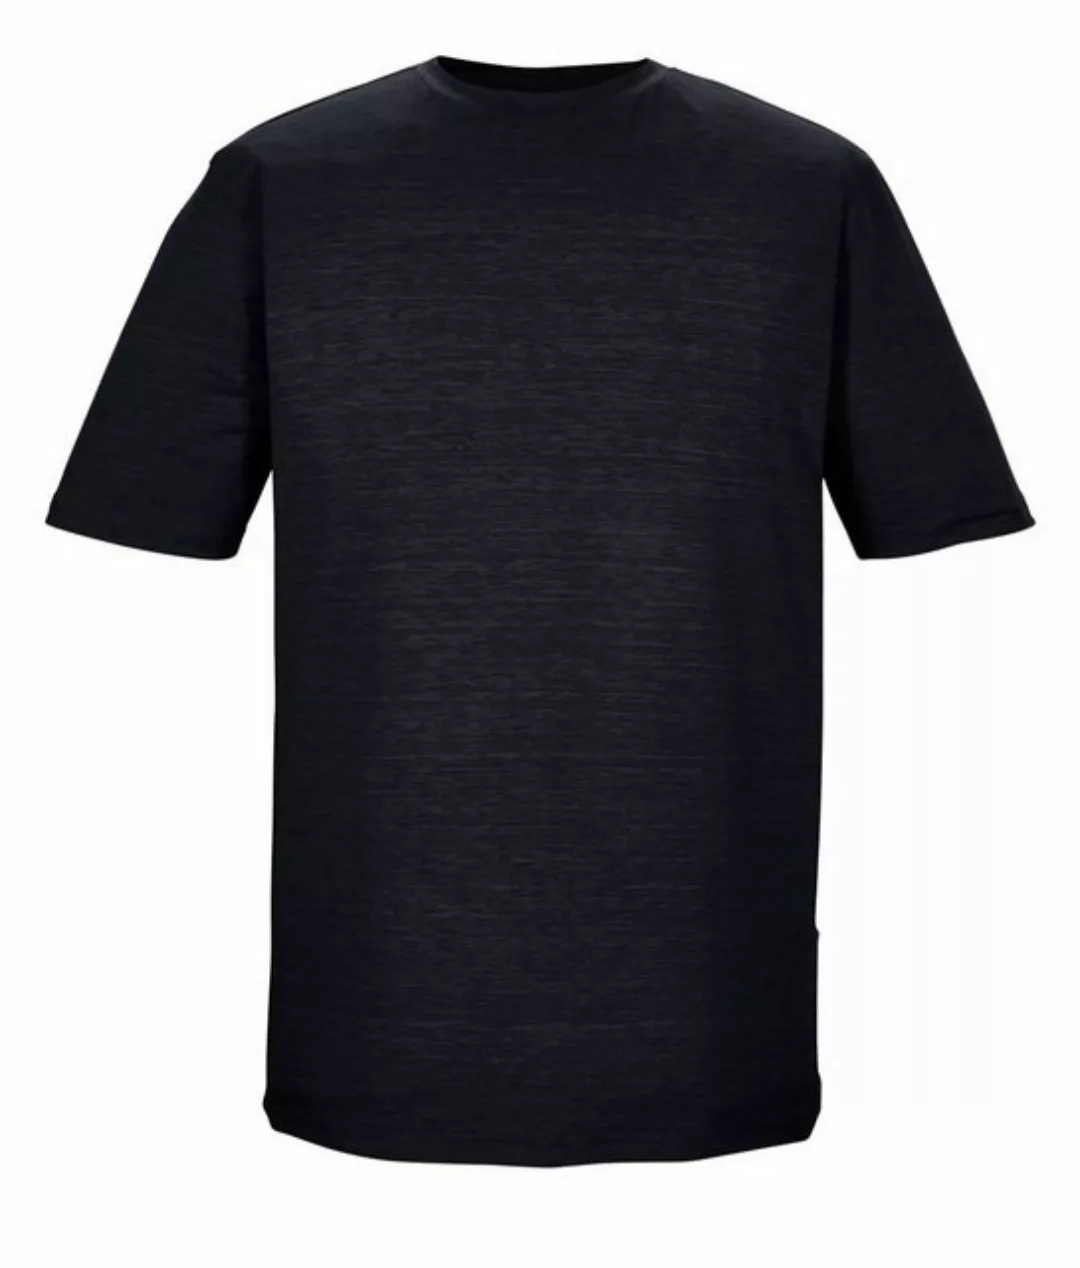 Killtec T-Shirt killtec Herren T-Shirt KOS 250 MN TSHRT günstig online kaufen